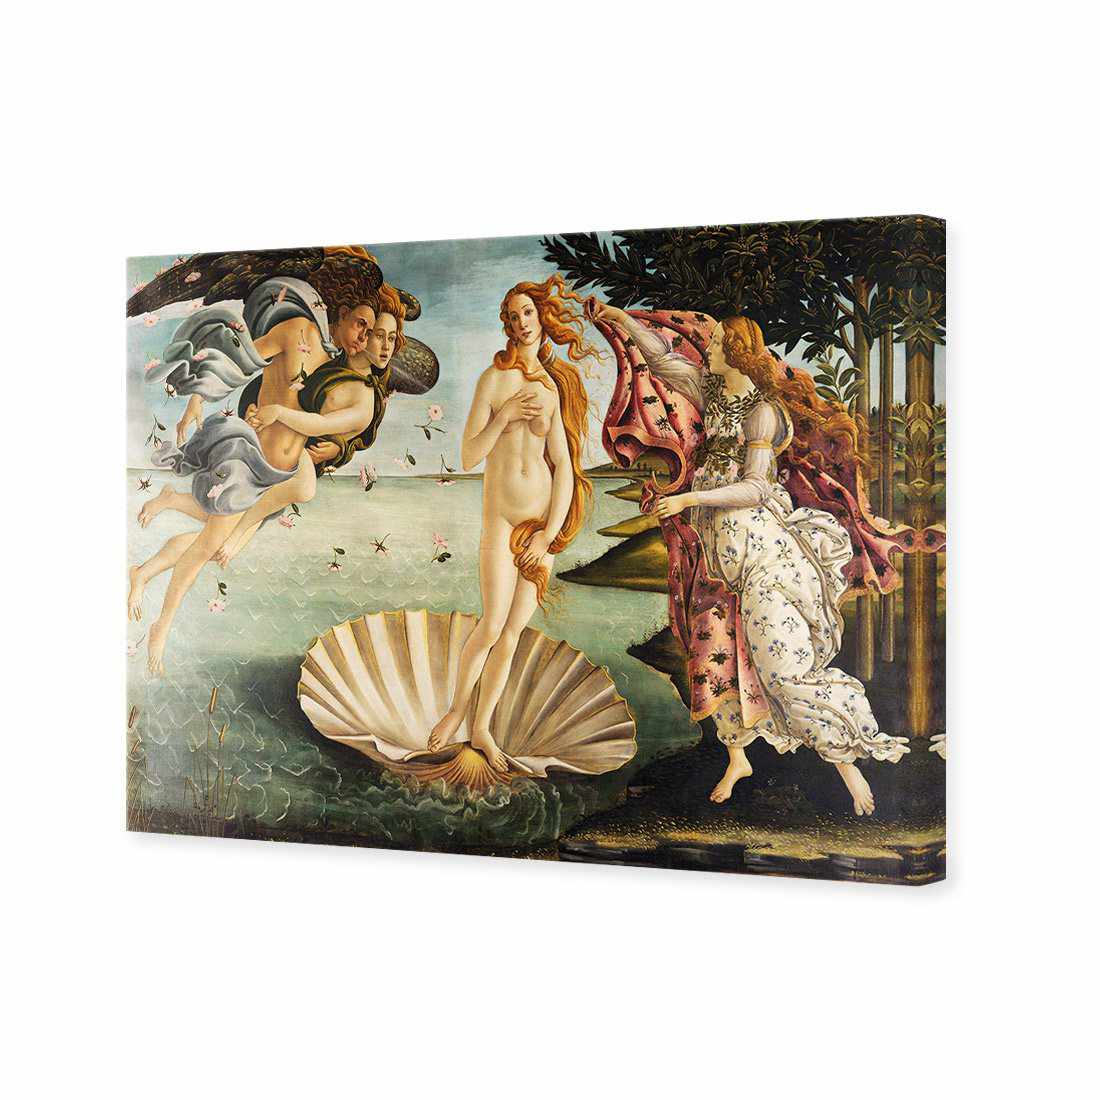 The Birth Of Venus - Botticelli Canvas Art-Canvas-Wall Art Designs-45x30cm-Canvas - No Frame-Wall Art Designs